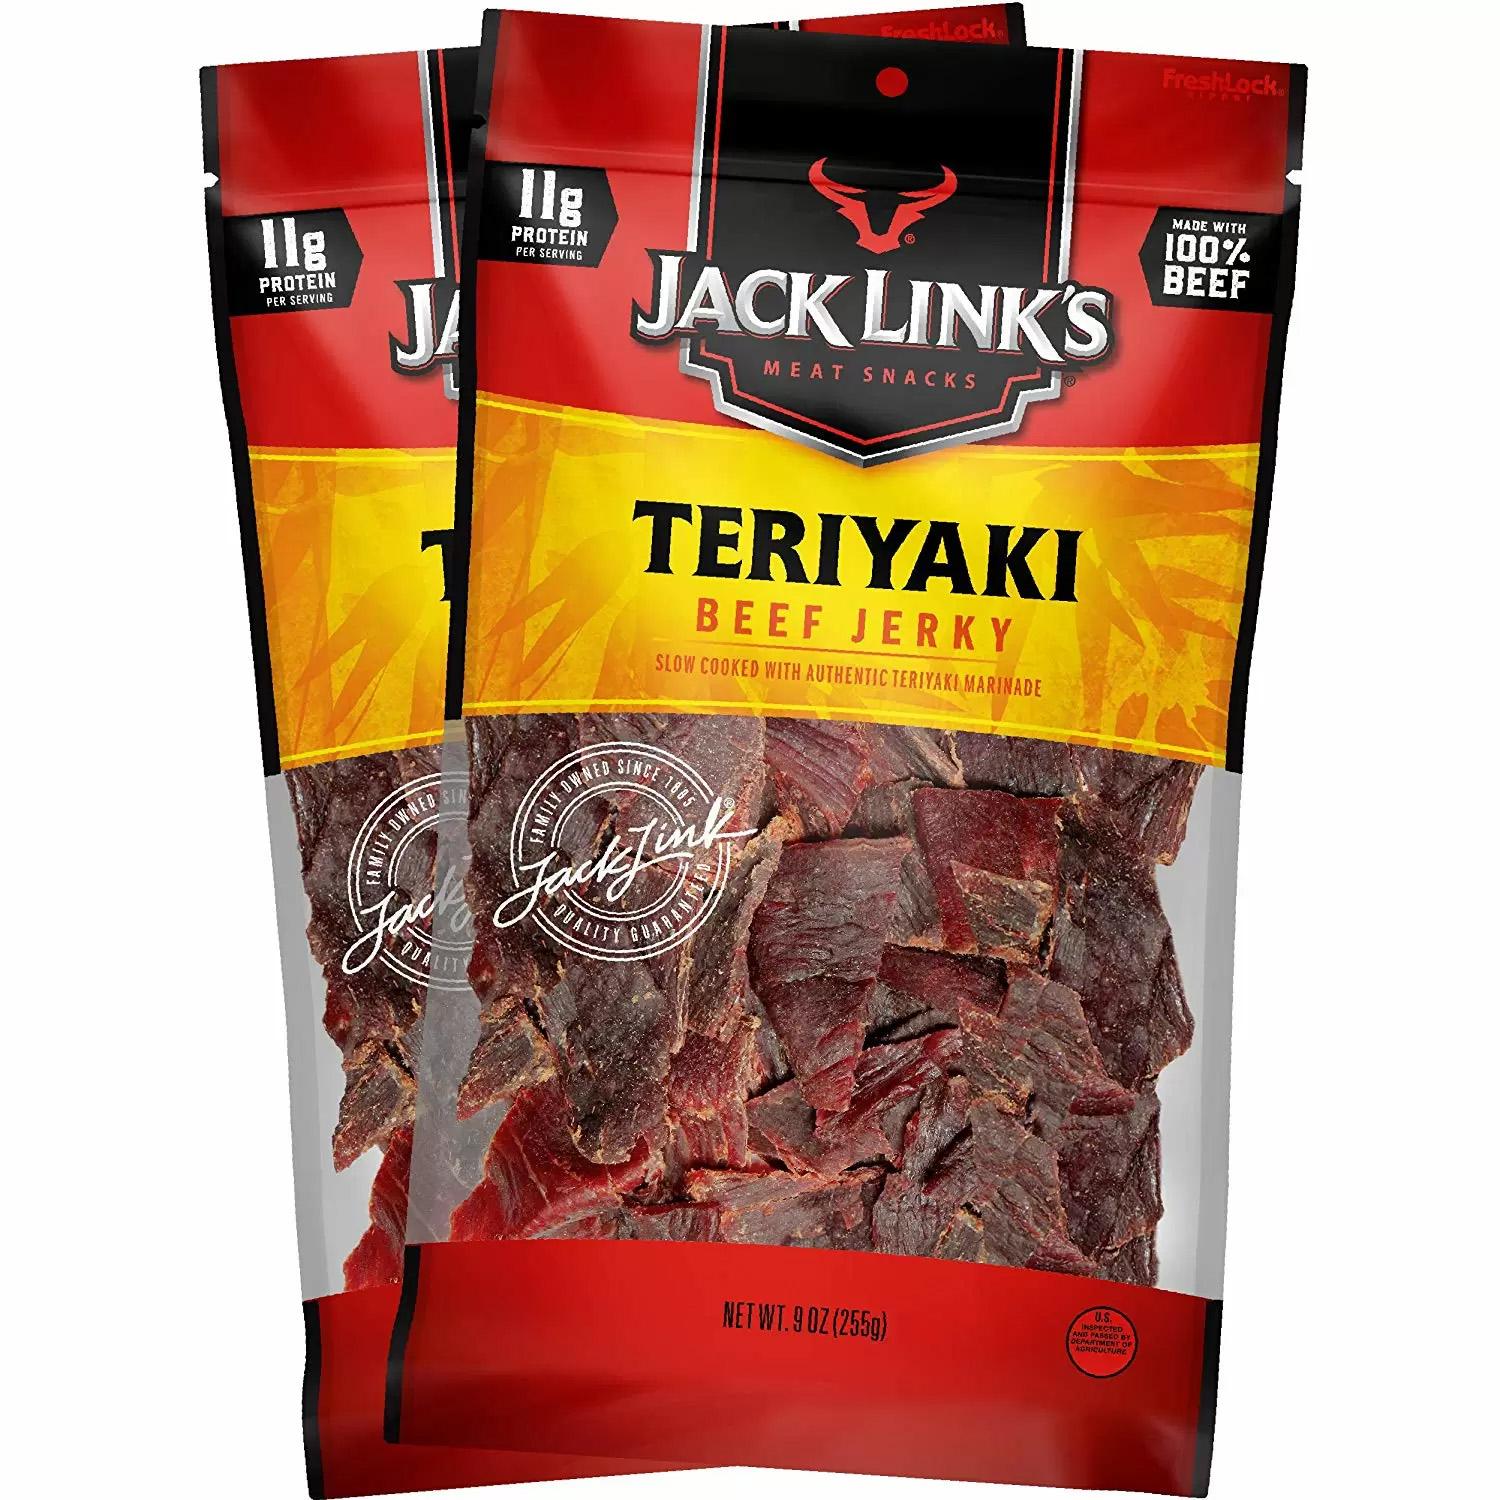 2 Bags of Jack Links Teriyaki Beef Jerky for $14.77 Shipped